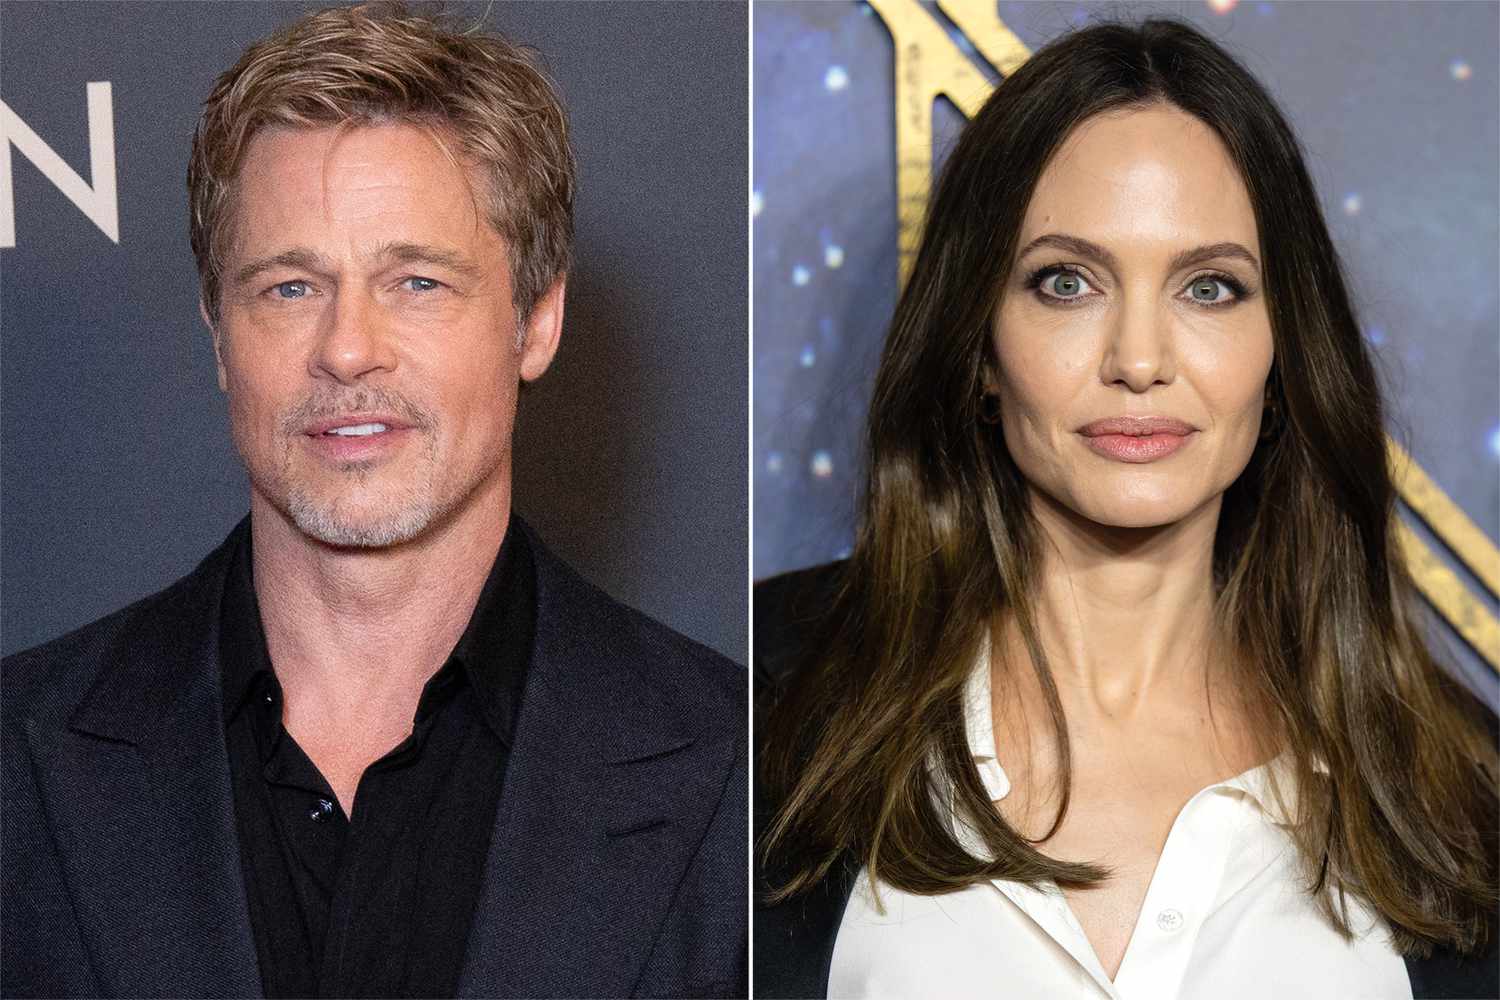 Angelina Jolie says Brad Pitt's 'abuse' began before plane incident